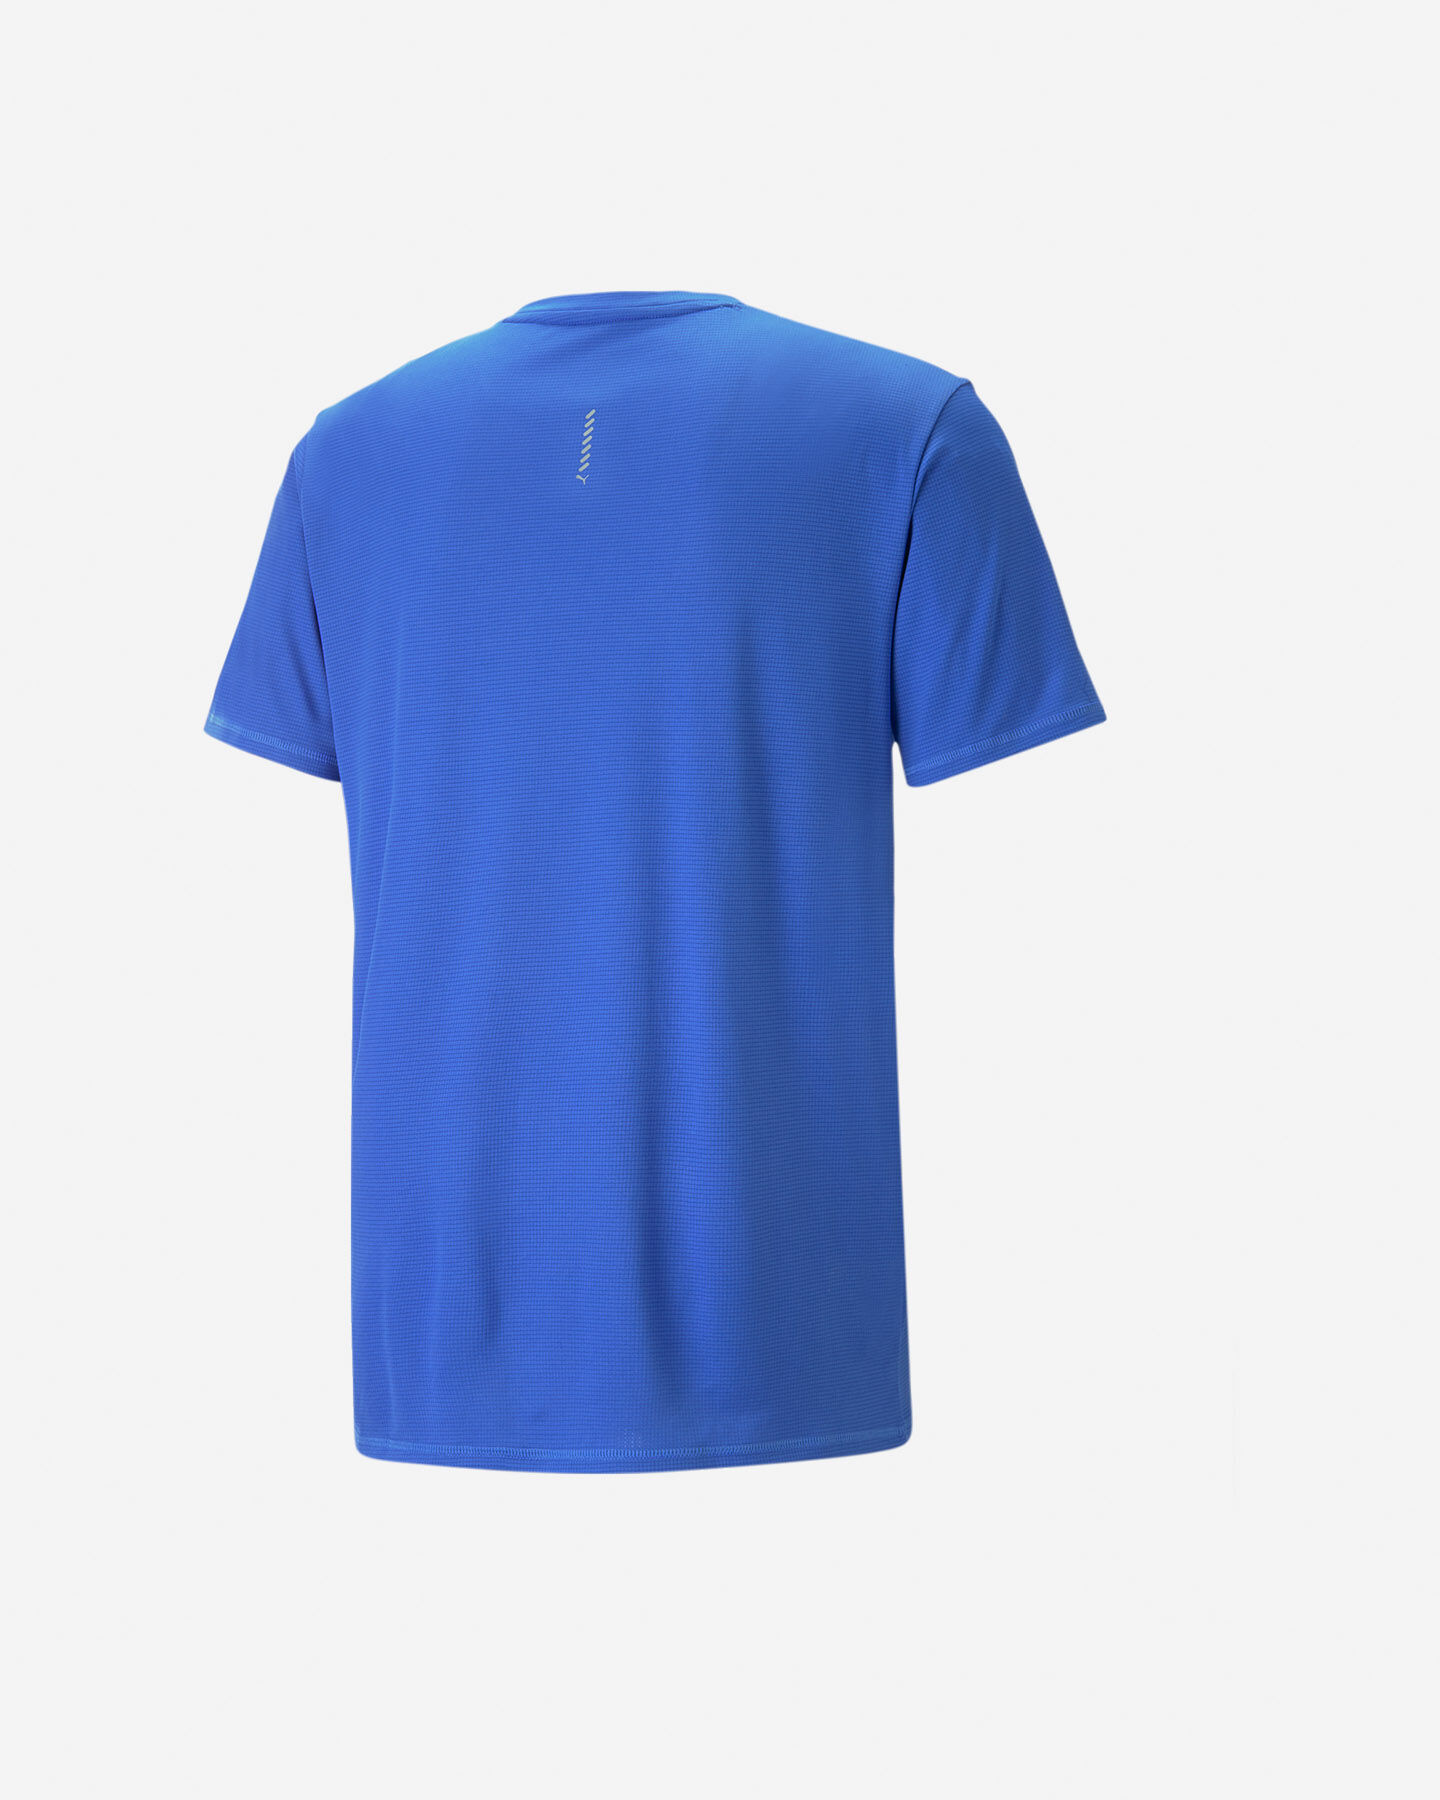  T-Shirt running PUMA FAVORITE LOGO M S5540677|92|S scatto 1